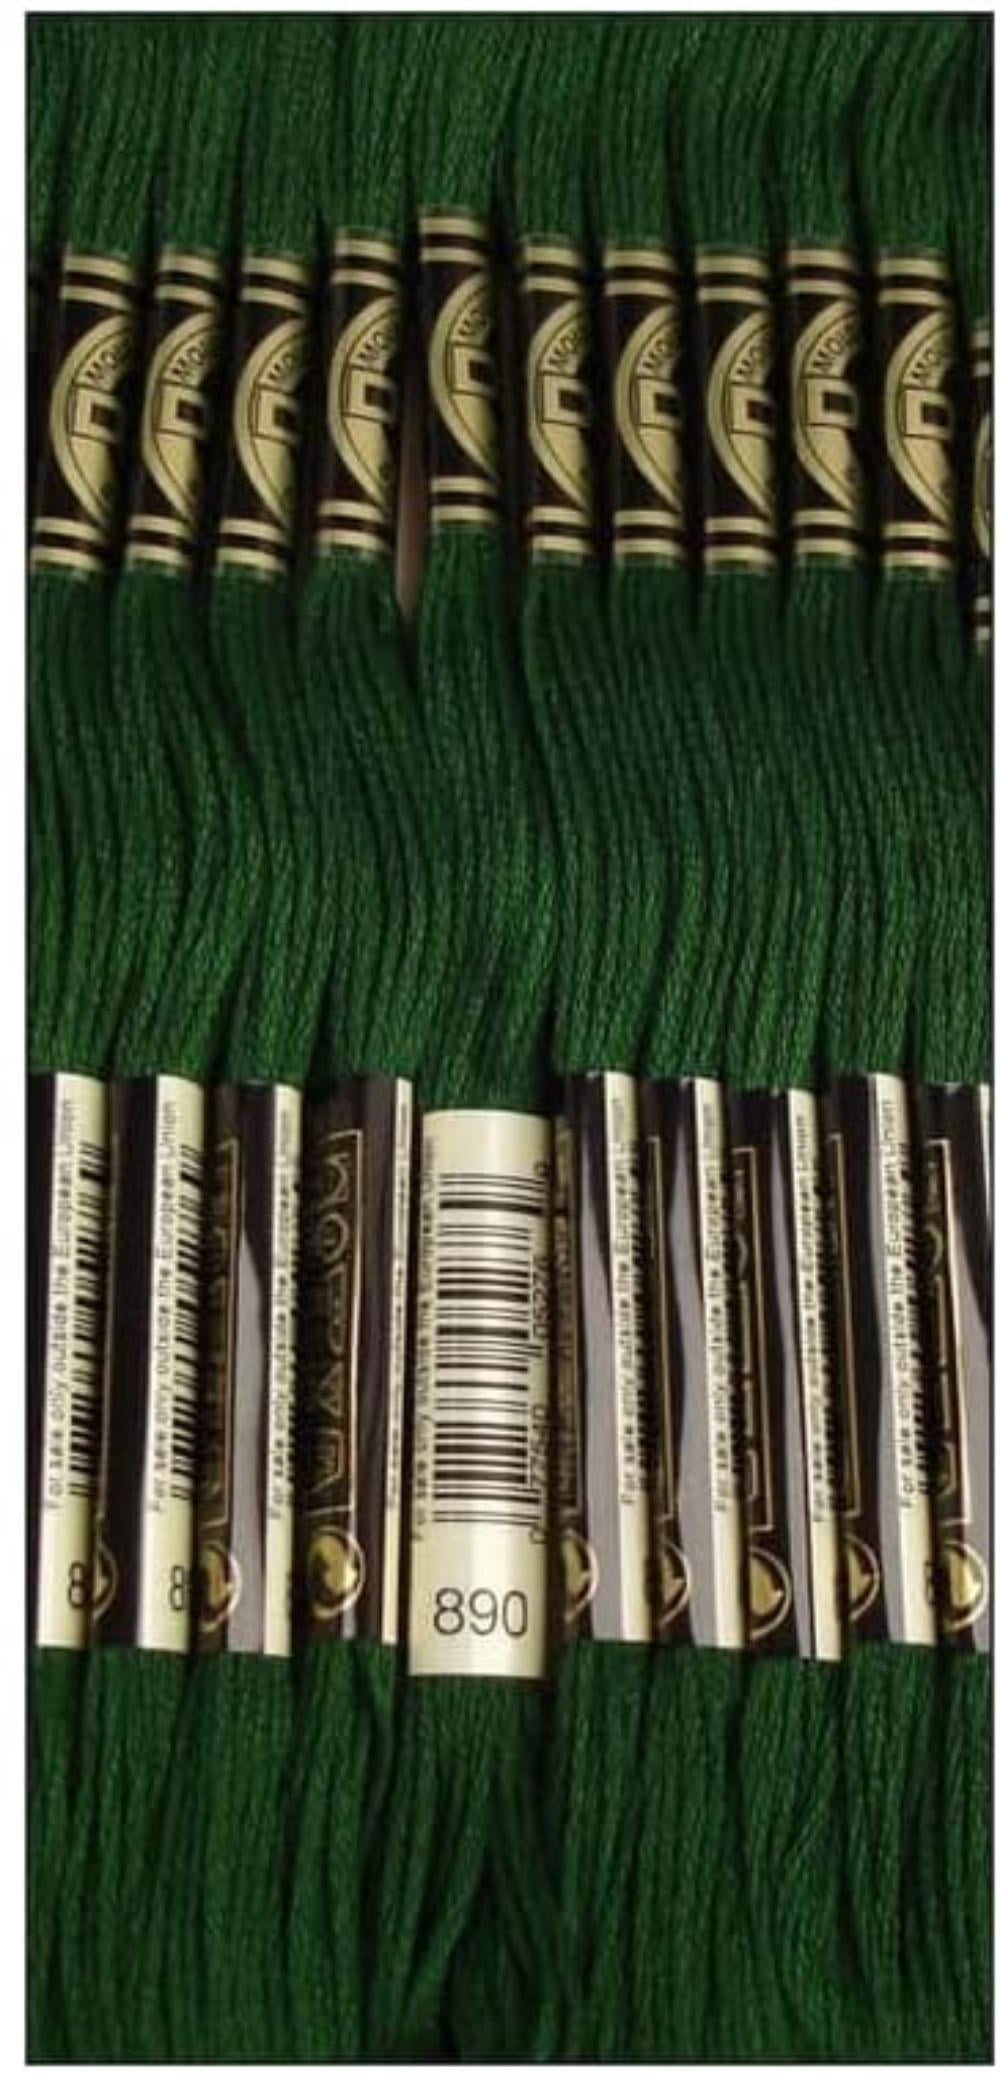 8.7-Yard DMC 117-890 6 Strand Embroidery Cotton Floss Ultra Dark Pistachio Green